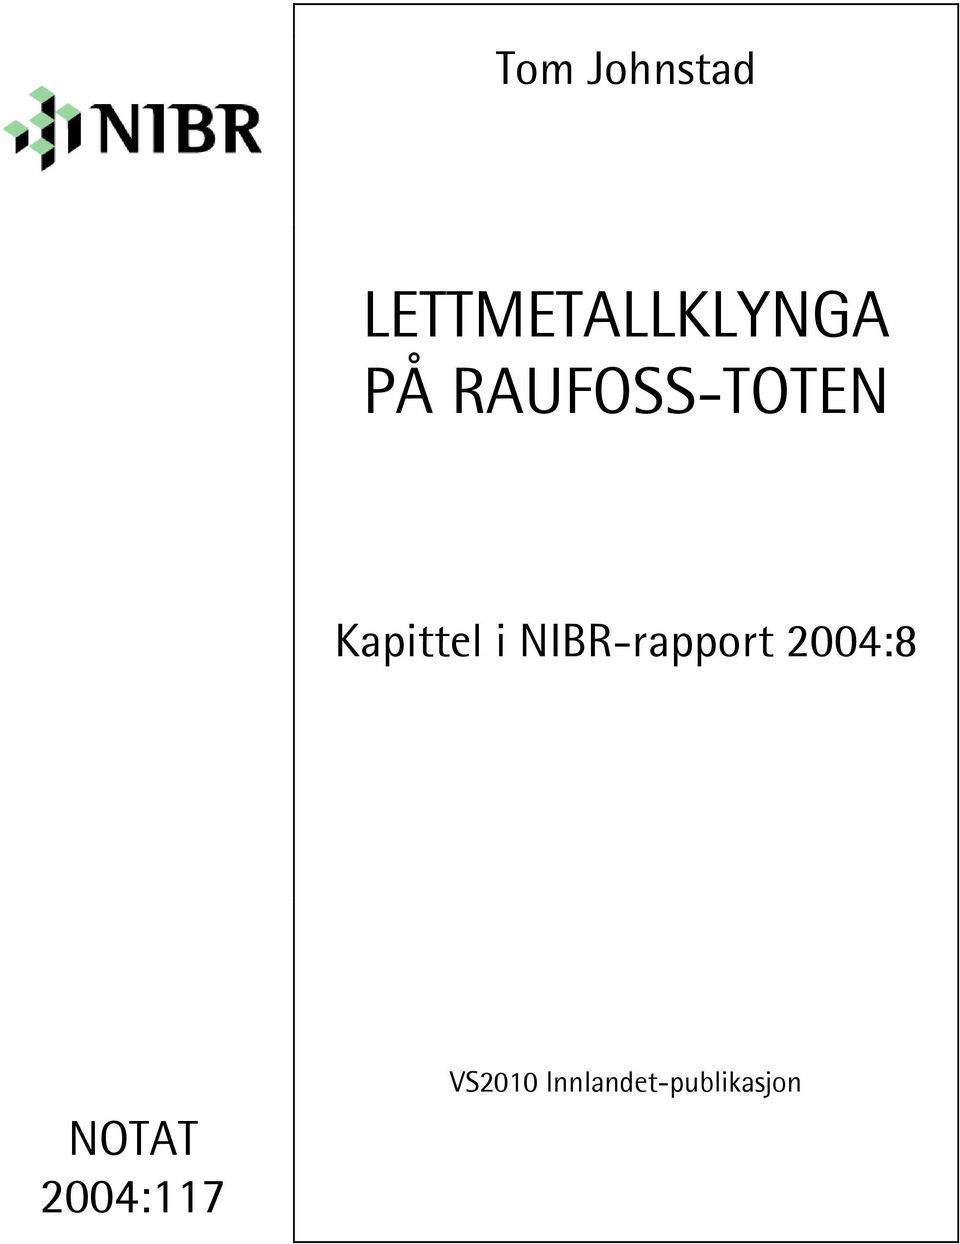 NIBR-rapport 2004:8 NOTAT